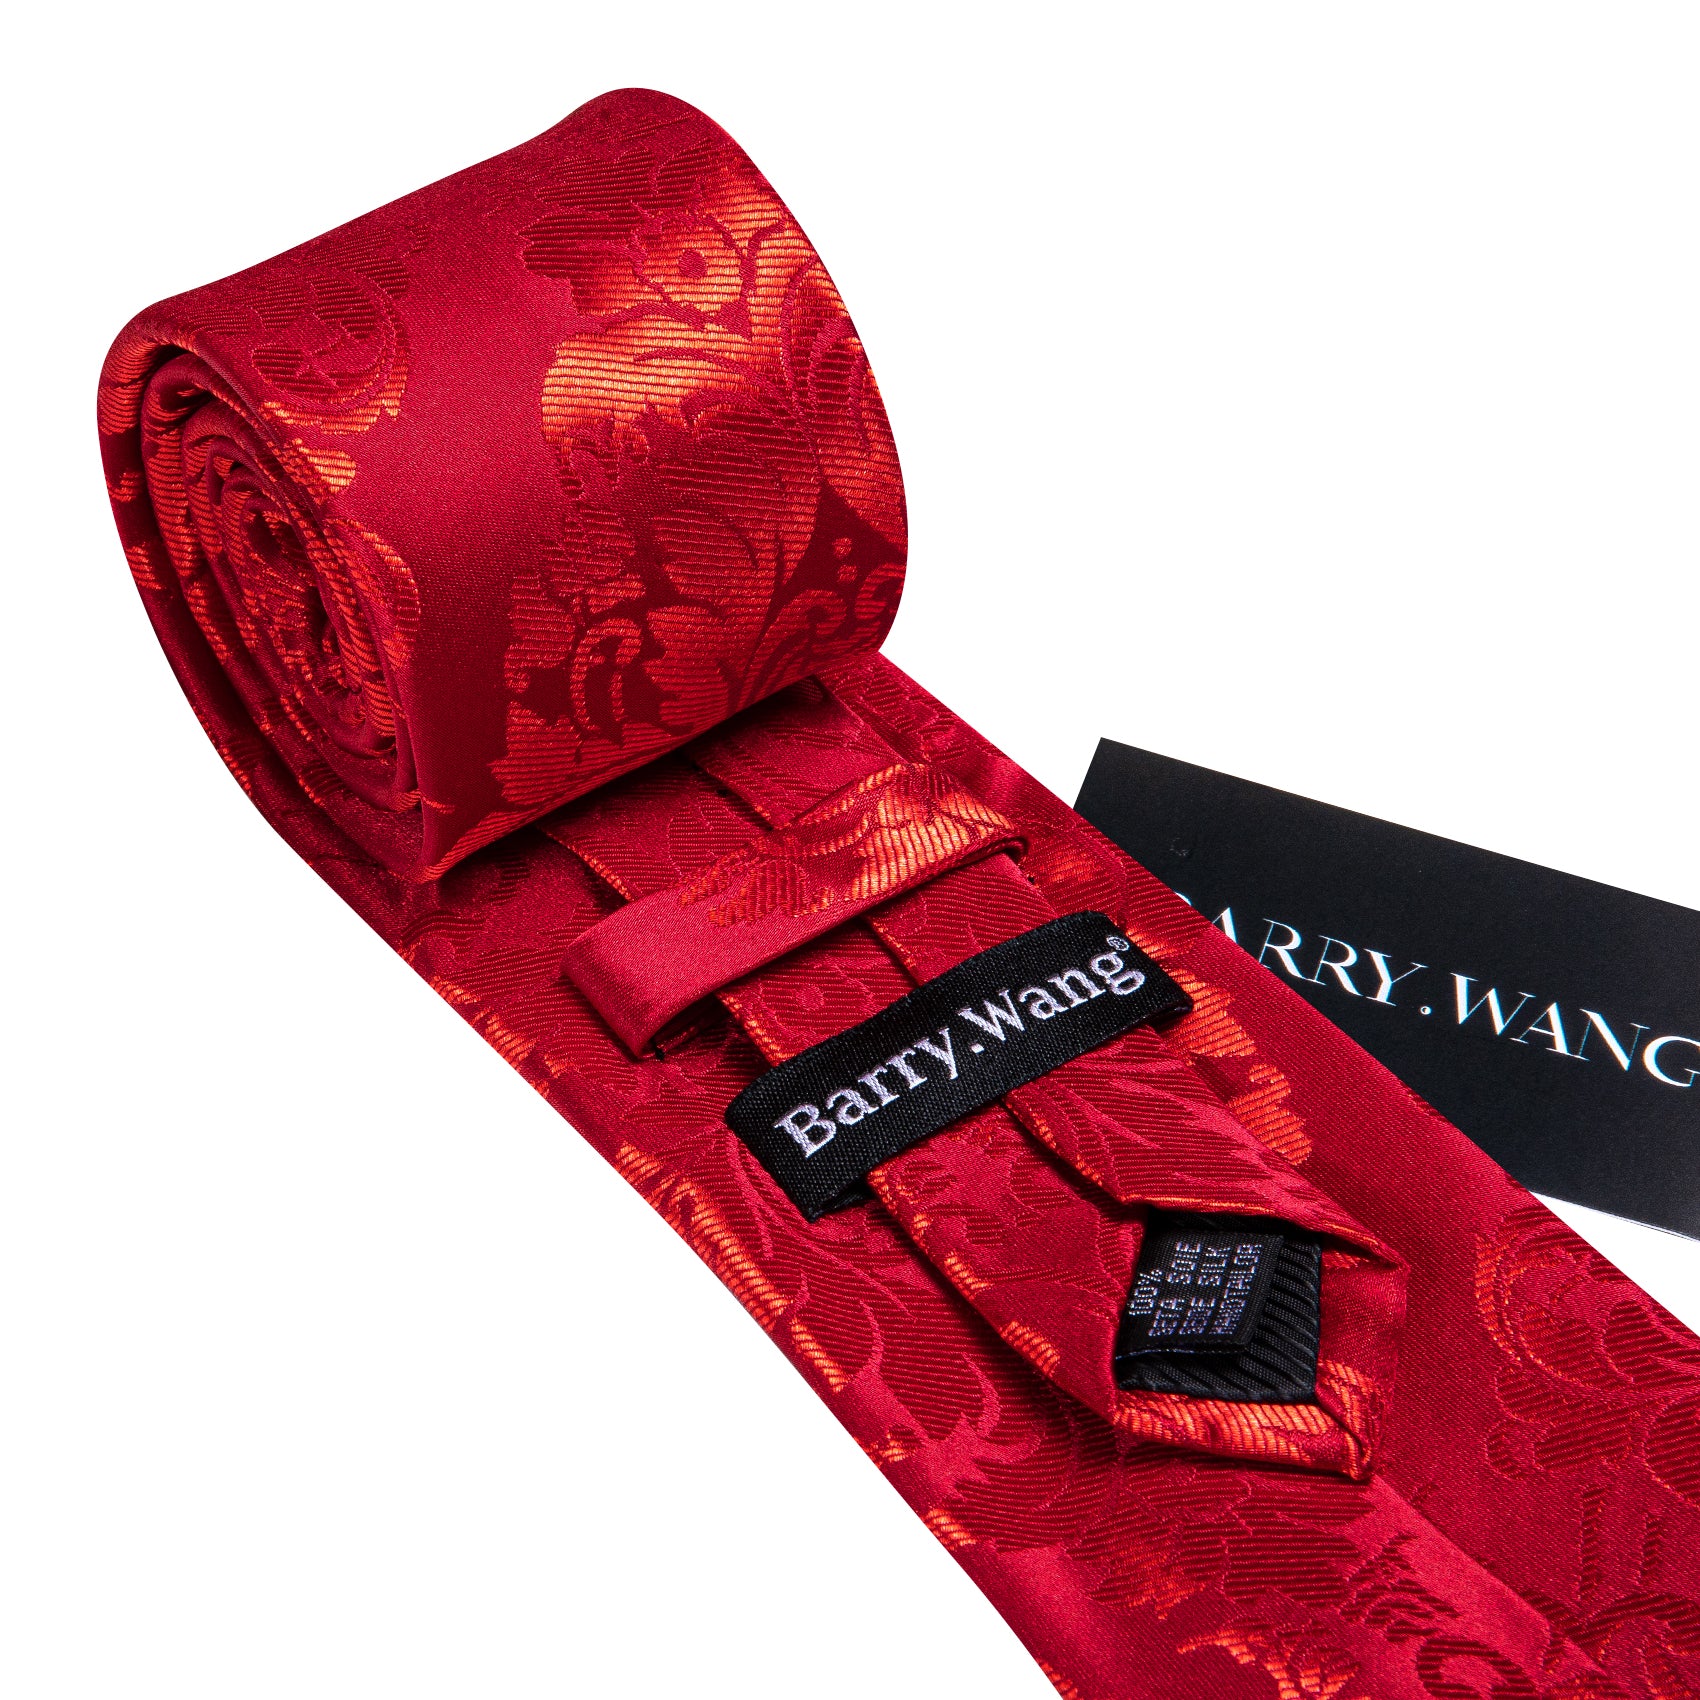 Barry.wang Red Tie Bright Floral Men's Silk Tie Hanky Cufflinks Set